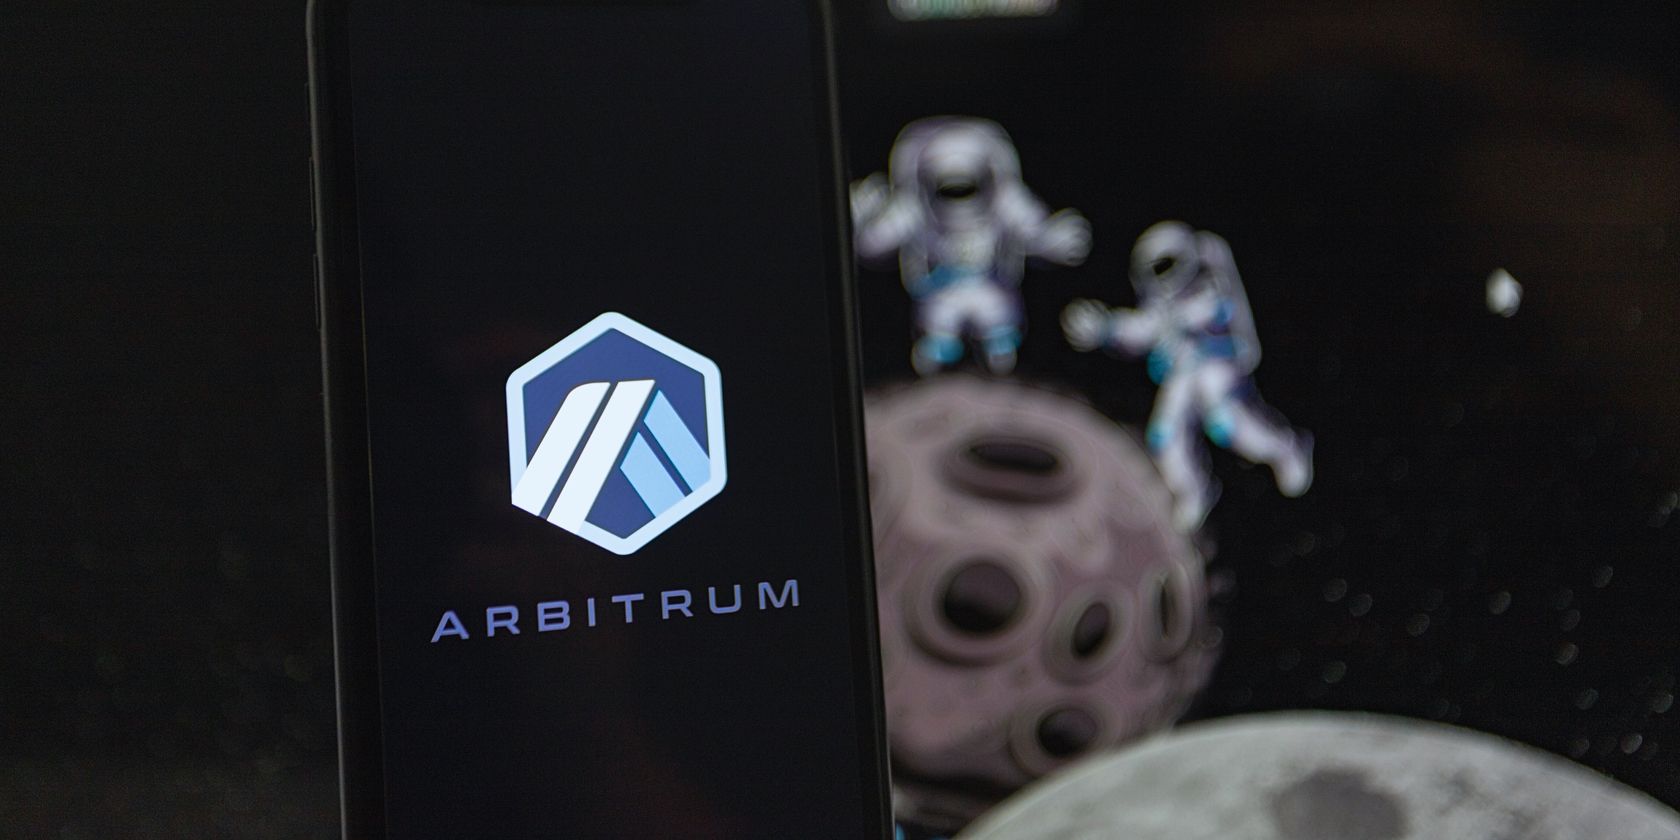 arbitrum logo on smartphone feature